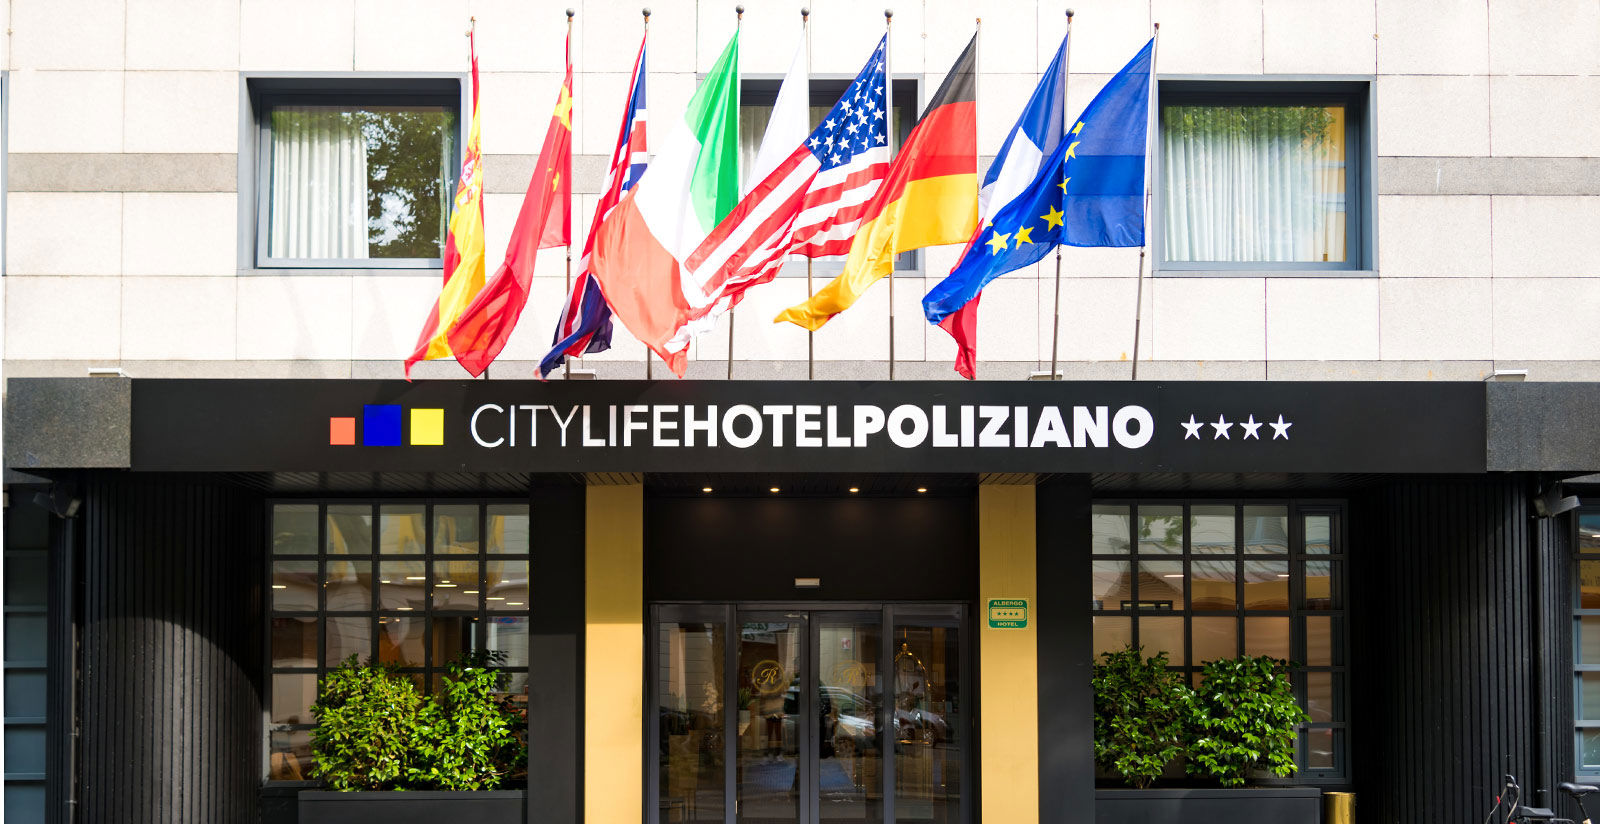 City Life Poliziano - Where we are 2